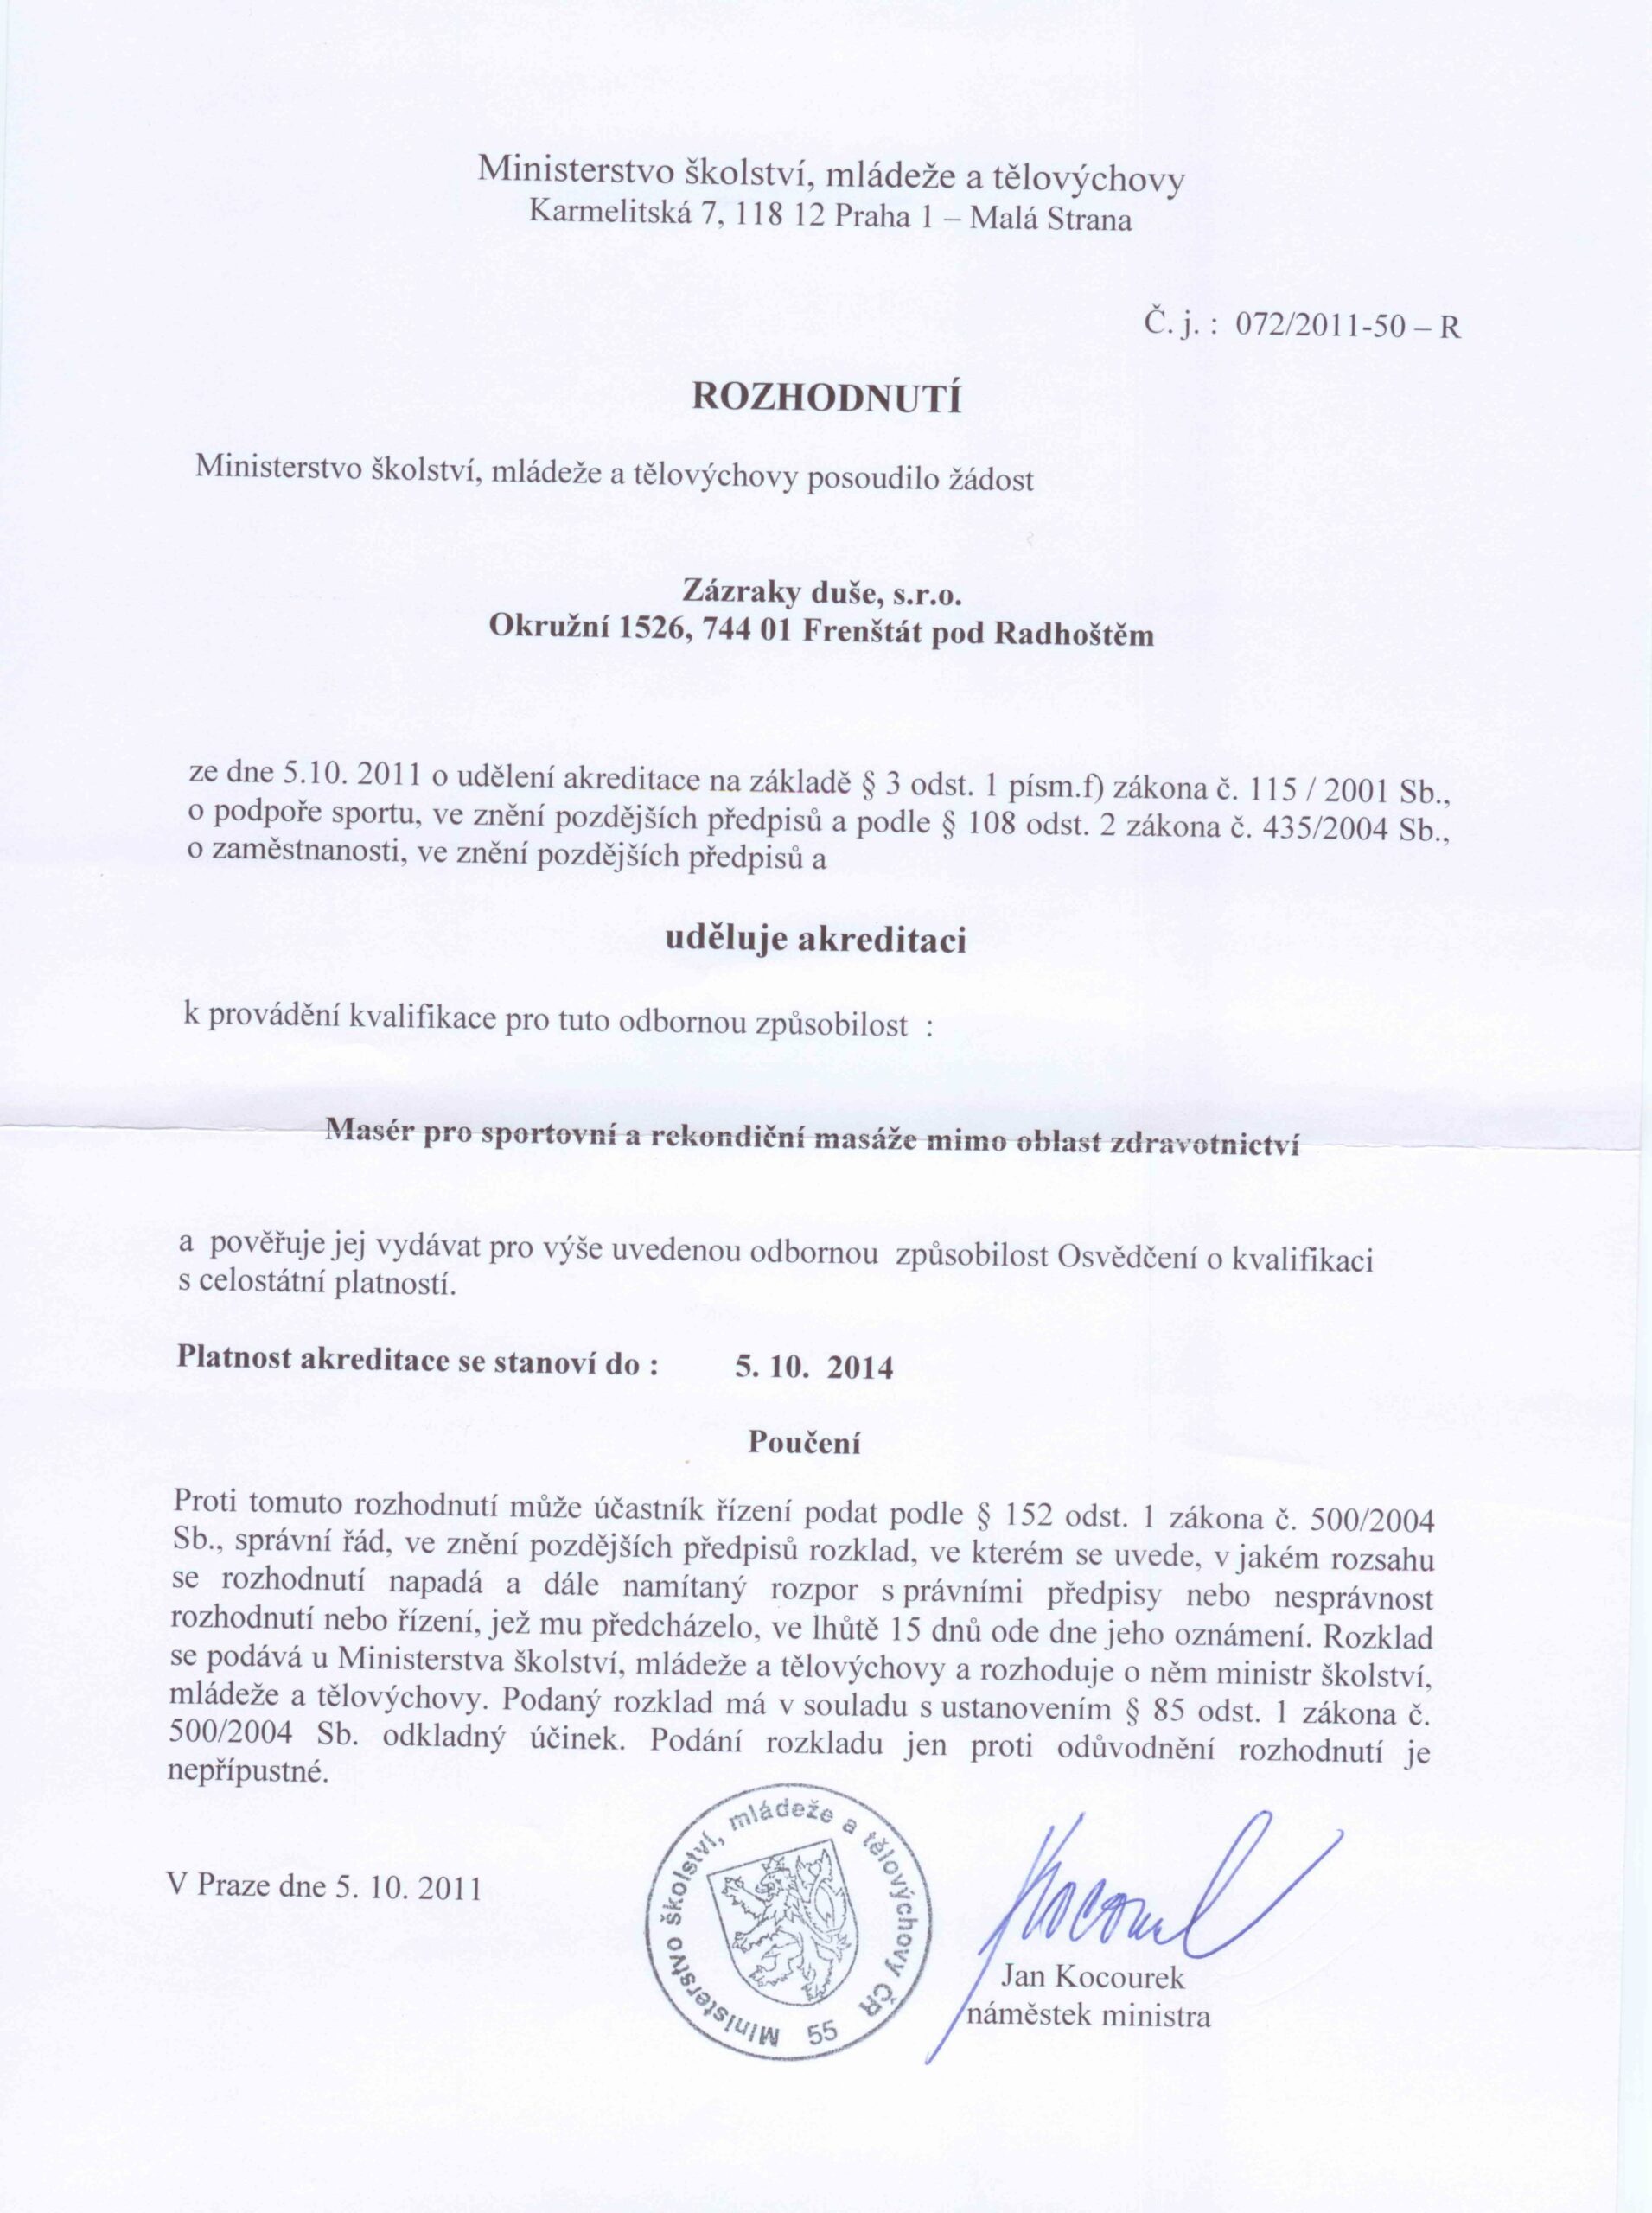 ZÁZRAKY DUŠE - akreditace 2011